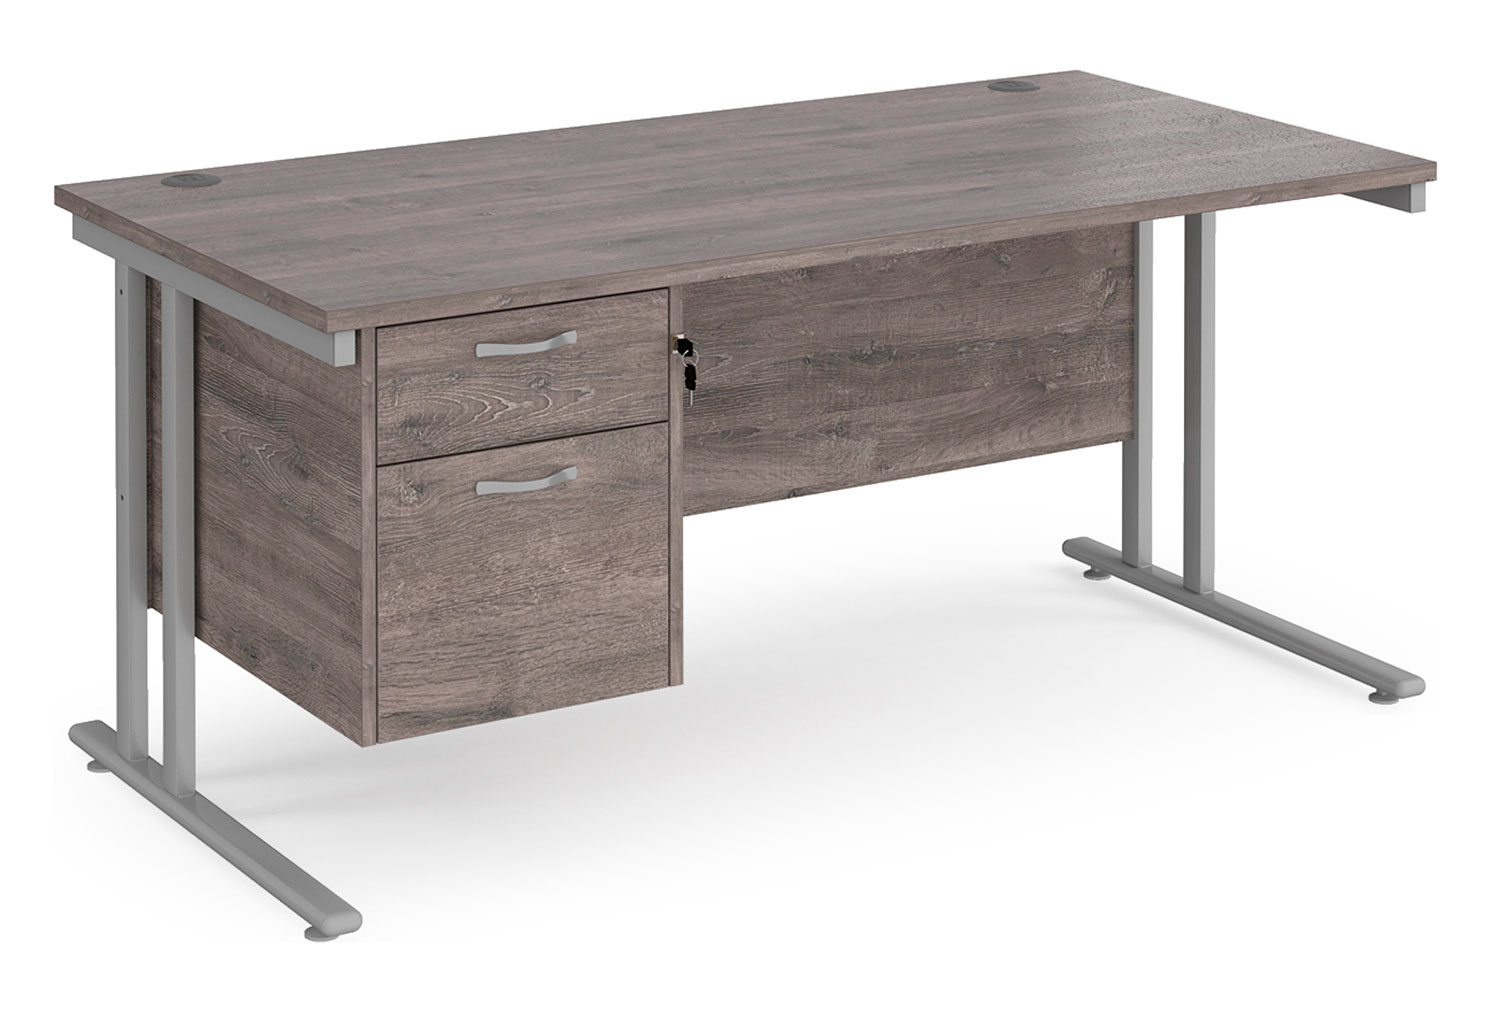 Value Line Deluxe C-Leg Rectangular Office Desk 2 Drawers (Silver Legs), 160wx80dx73h (cm), Grey Oak, Fully Installed